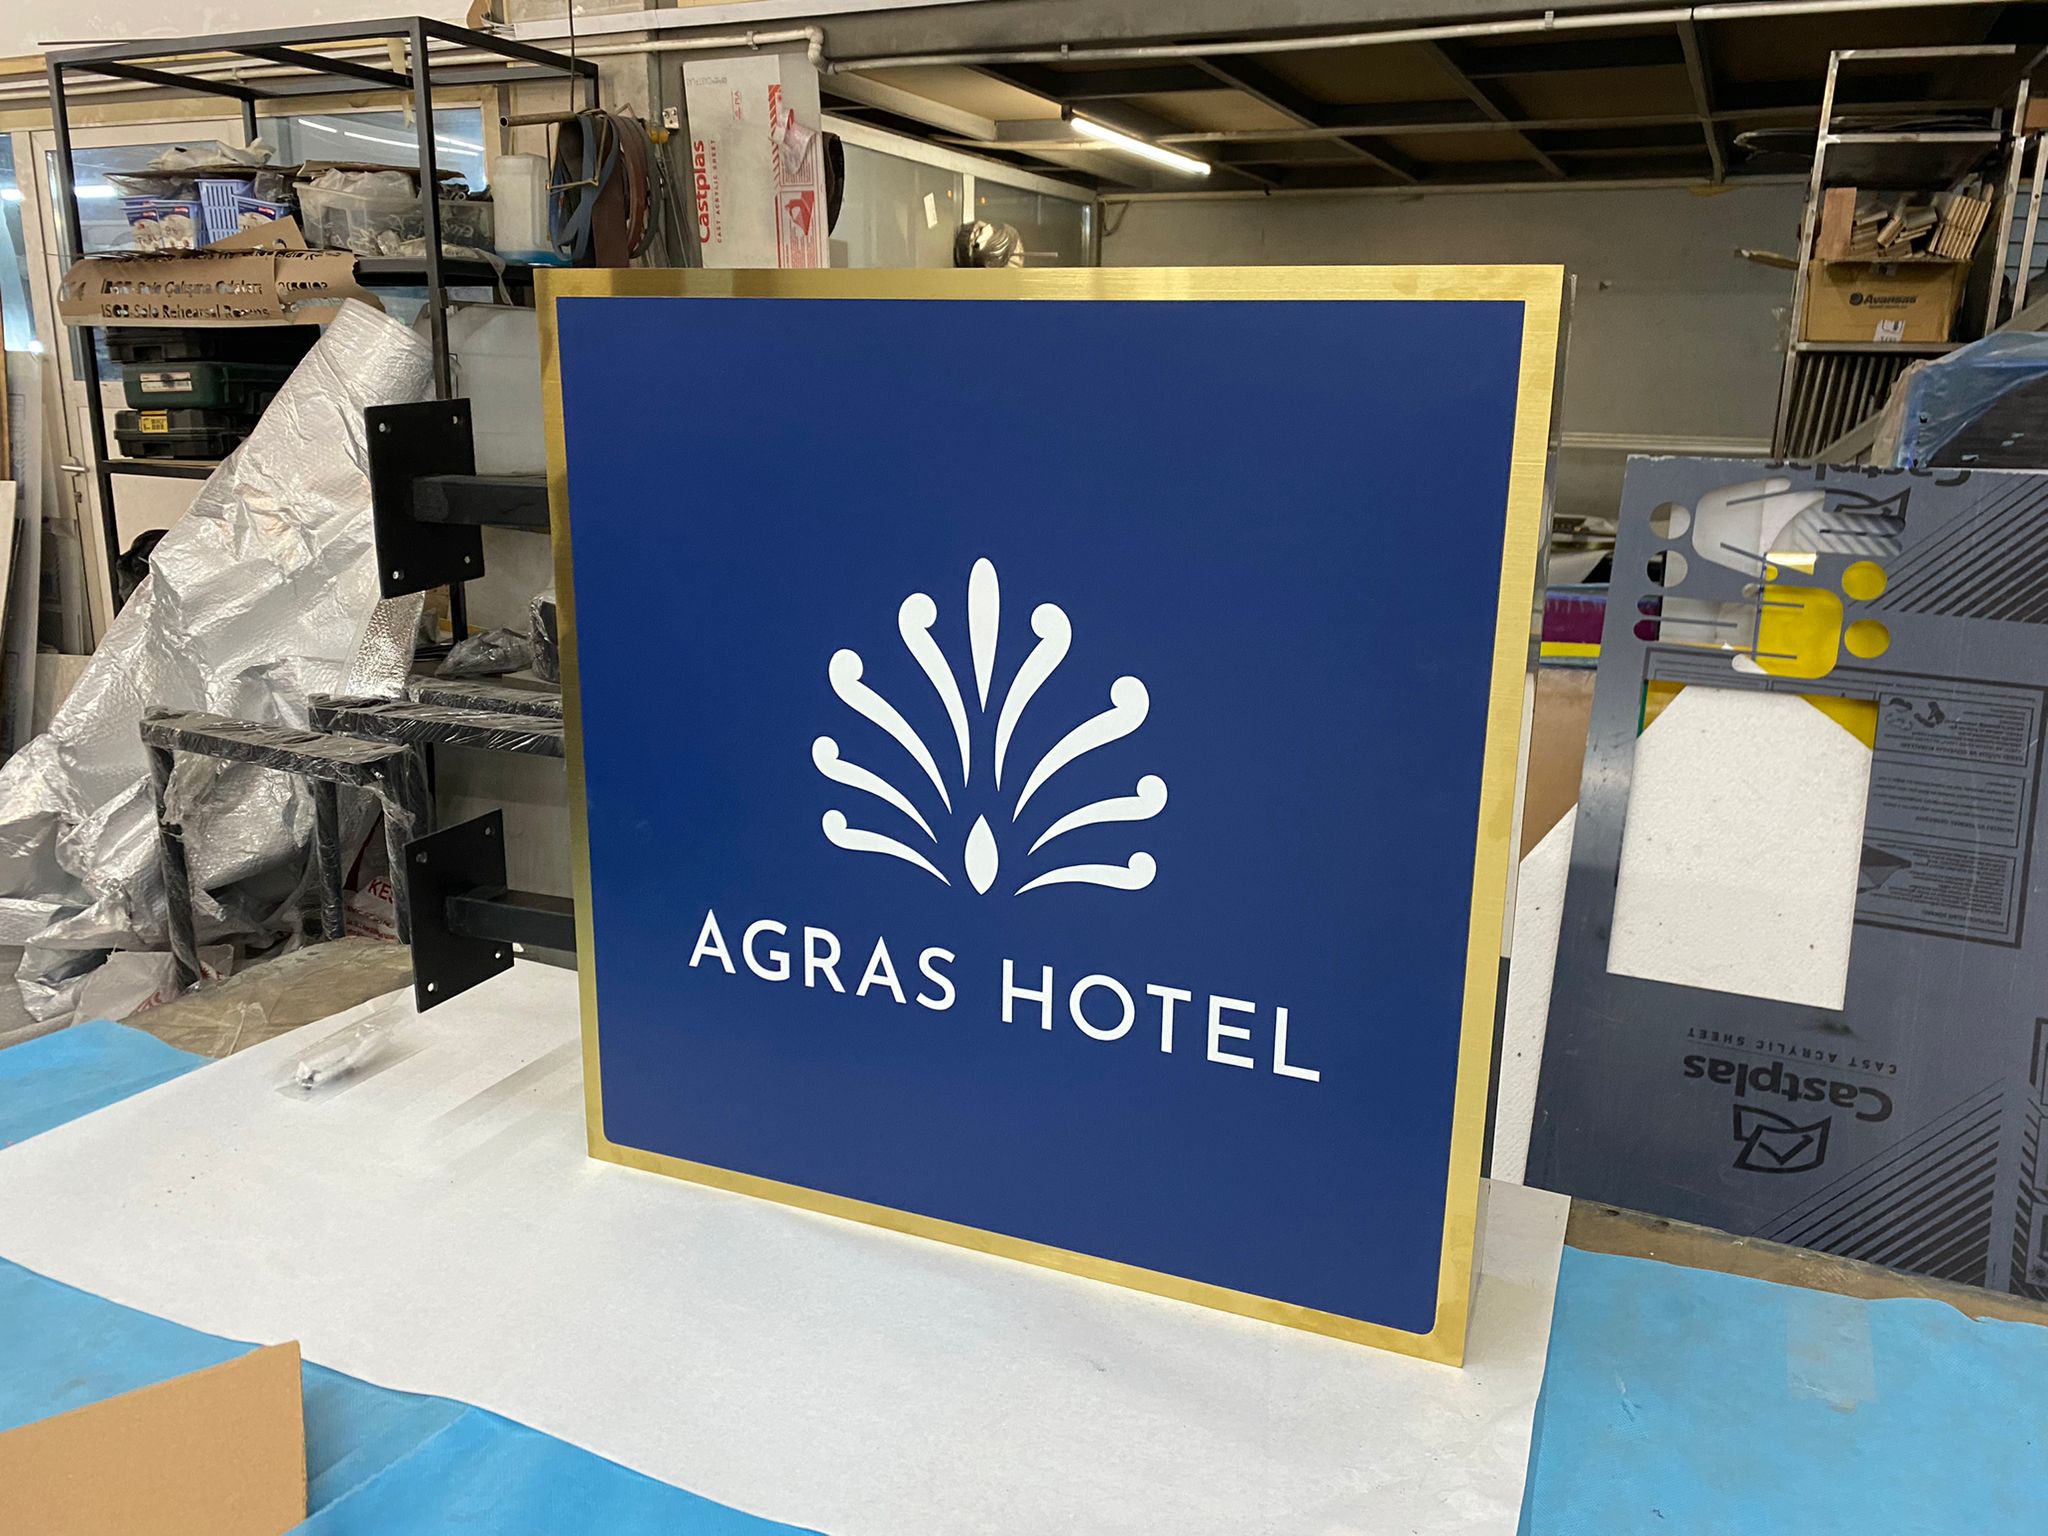 Agras Hotel Tabela